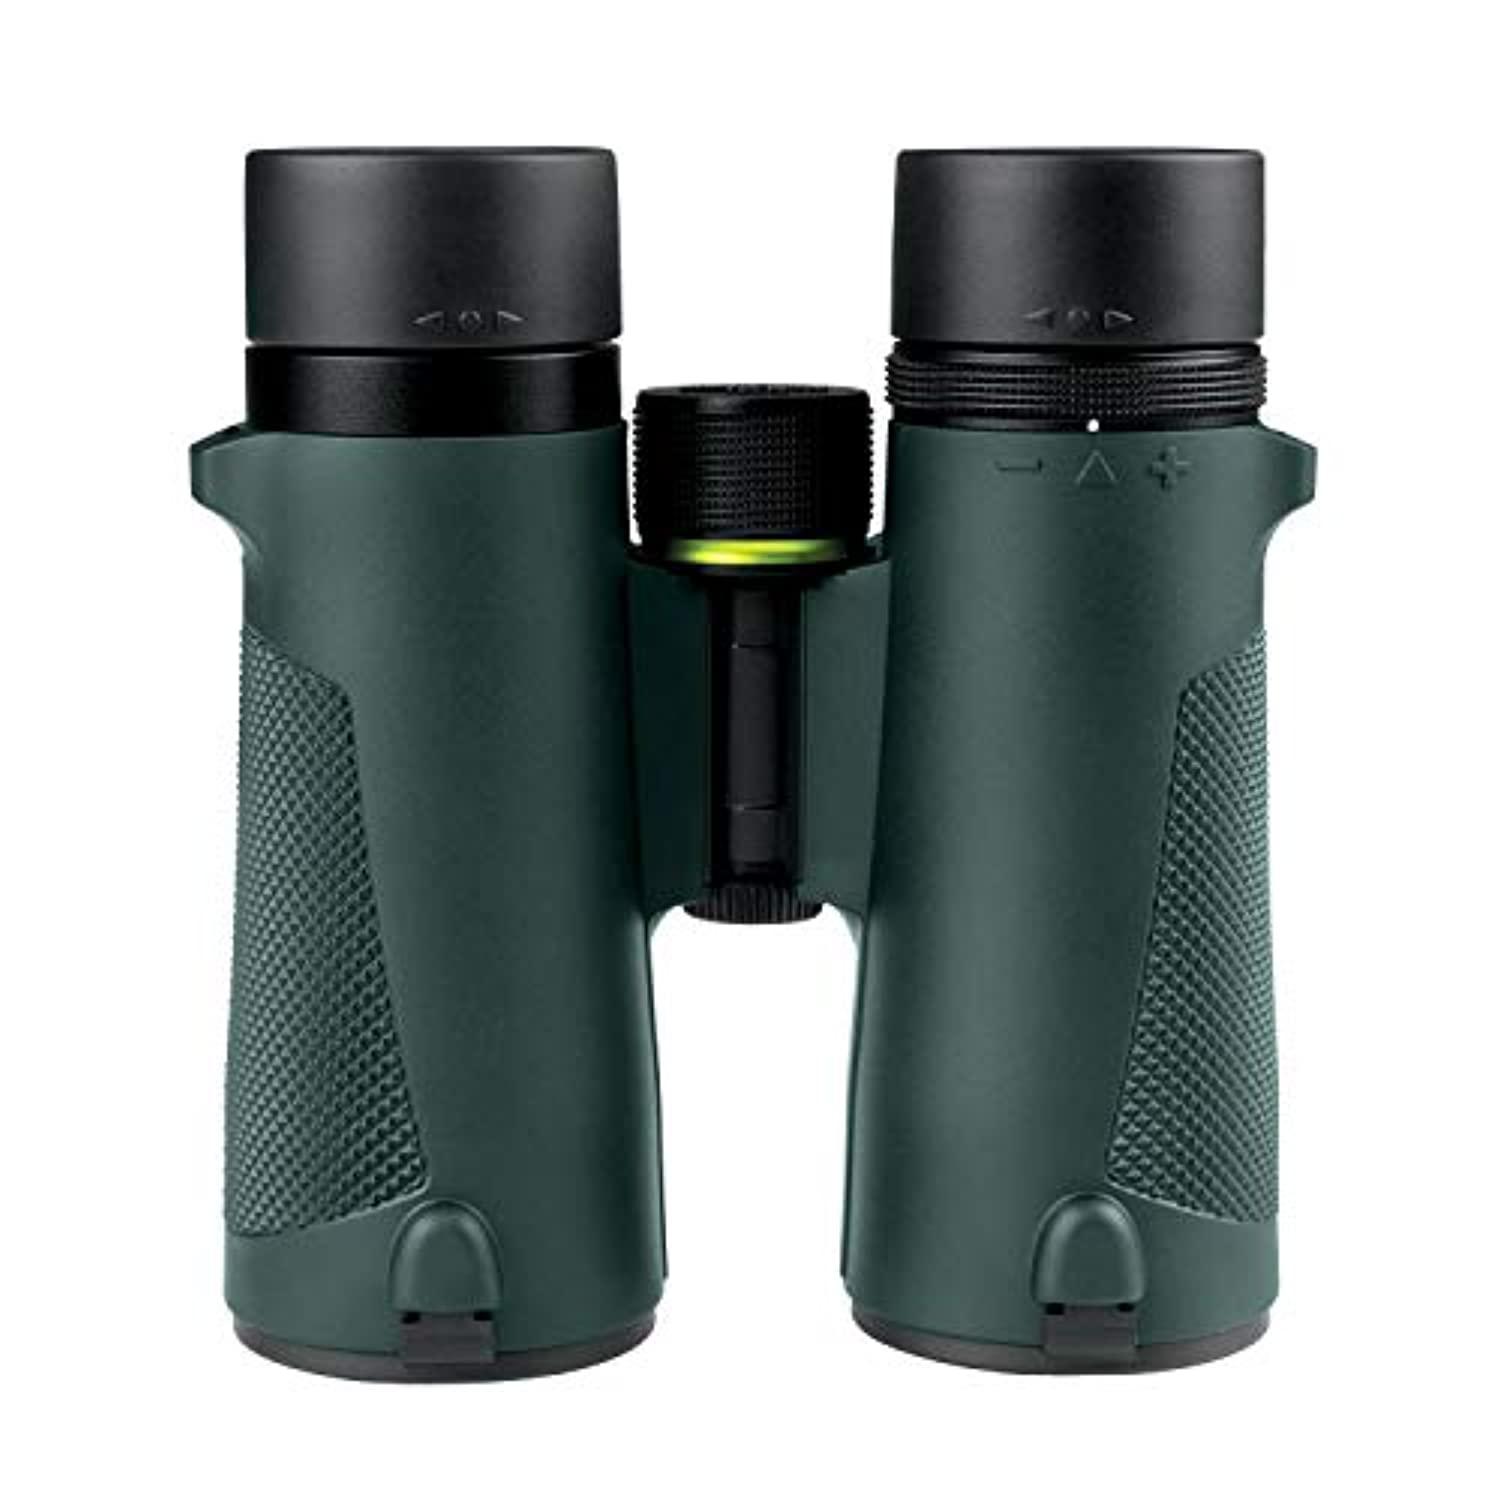 alpen shasta ridge 8x42 waterproof binoculars with bak4 optics